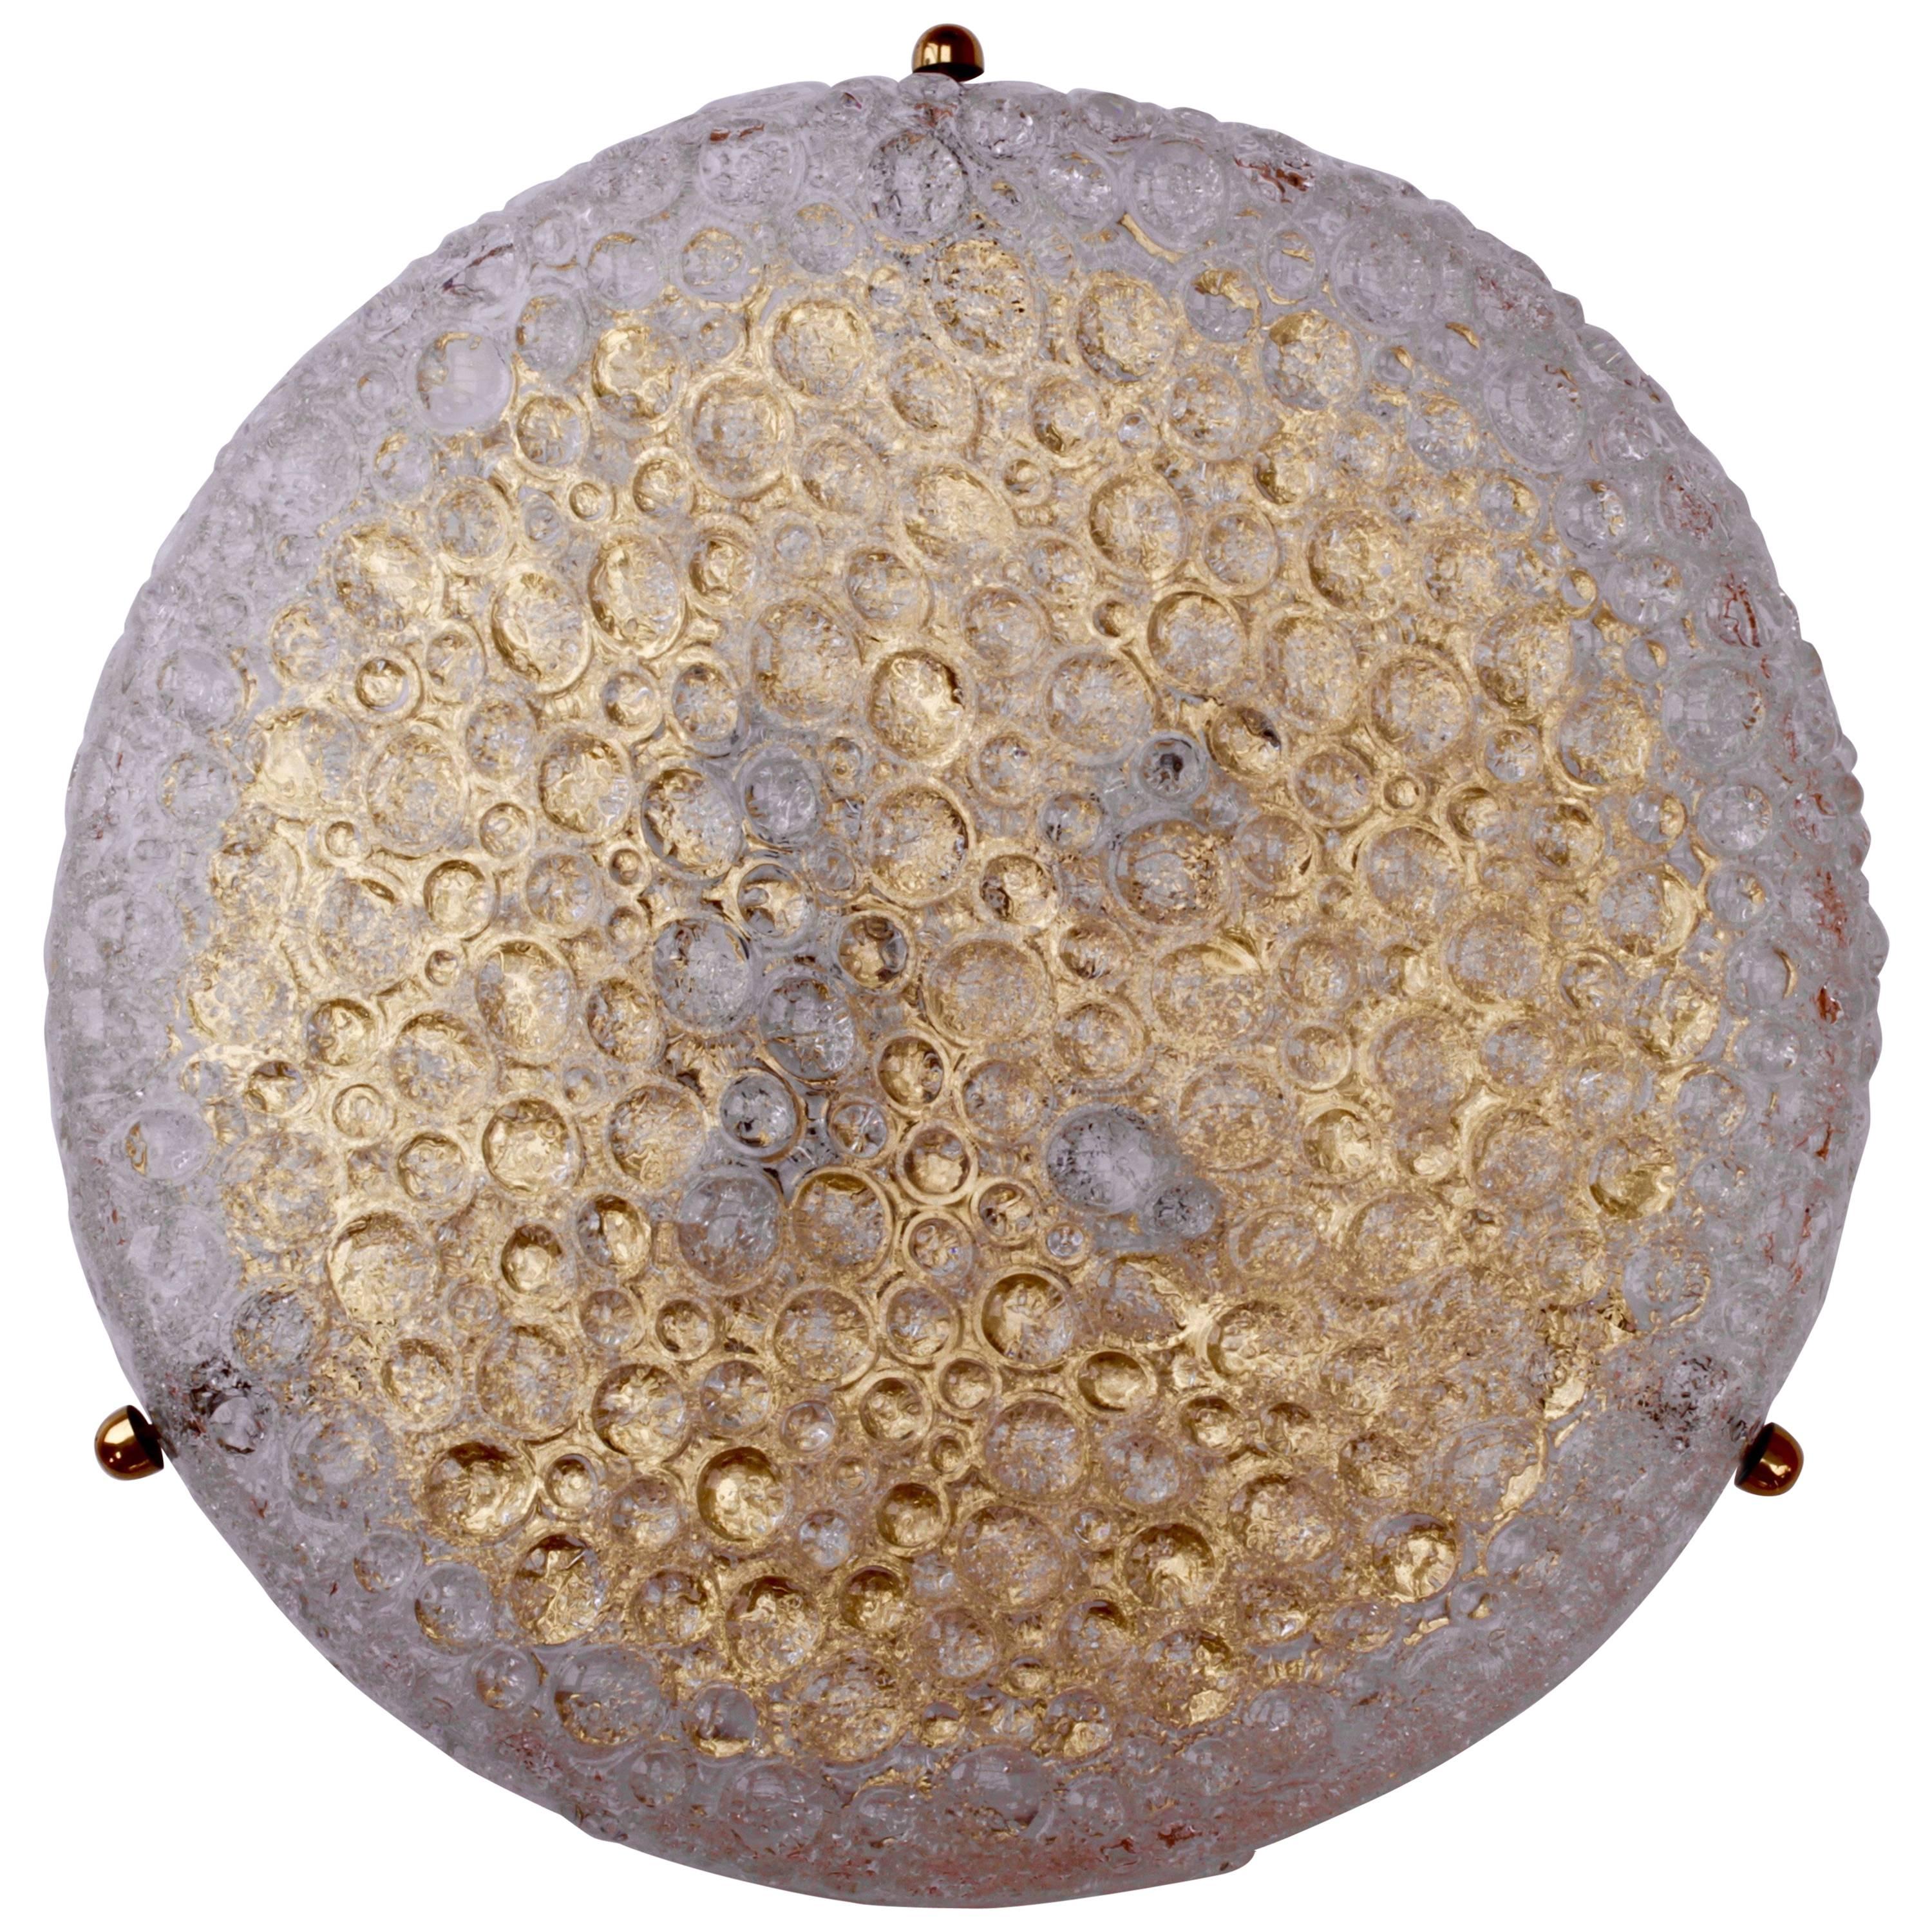 Huge 20" Textured Bubble Glass & Brass Flush Mount Light by Hillebrand, Germany